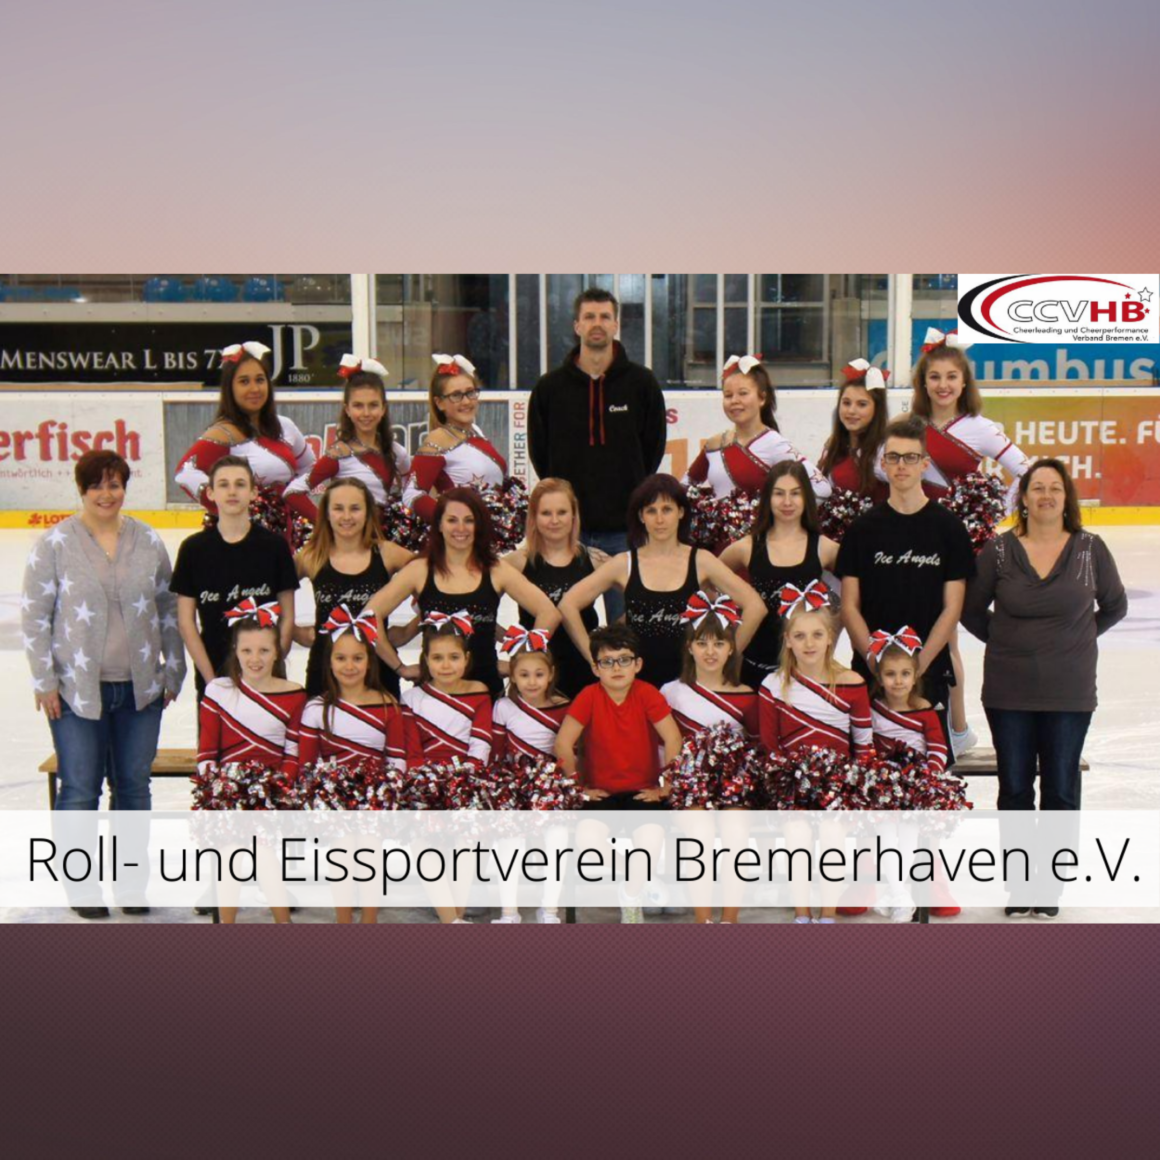 Roll- und Eissportverein Bremerhaven e.V. – here we are